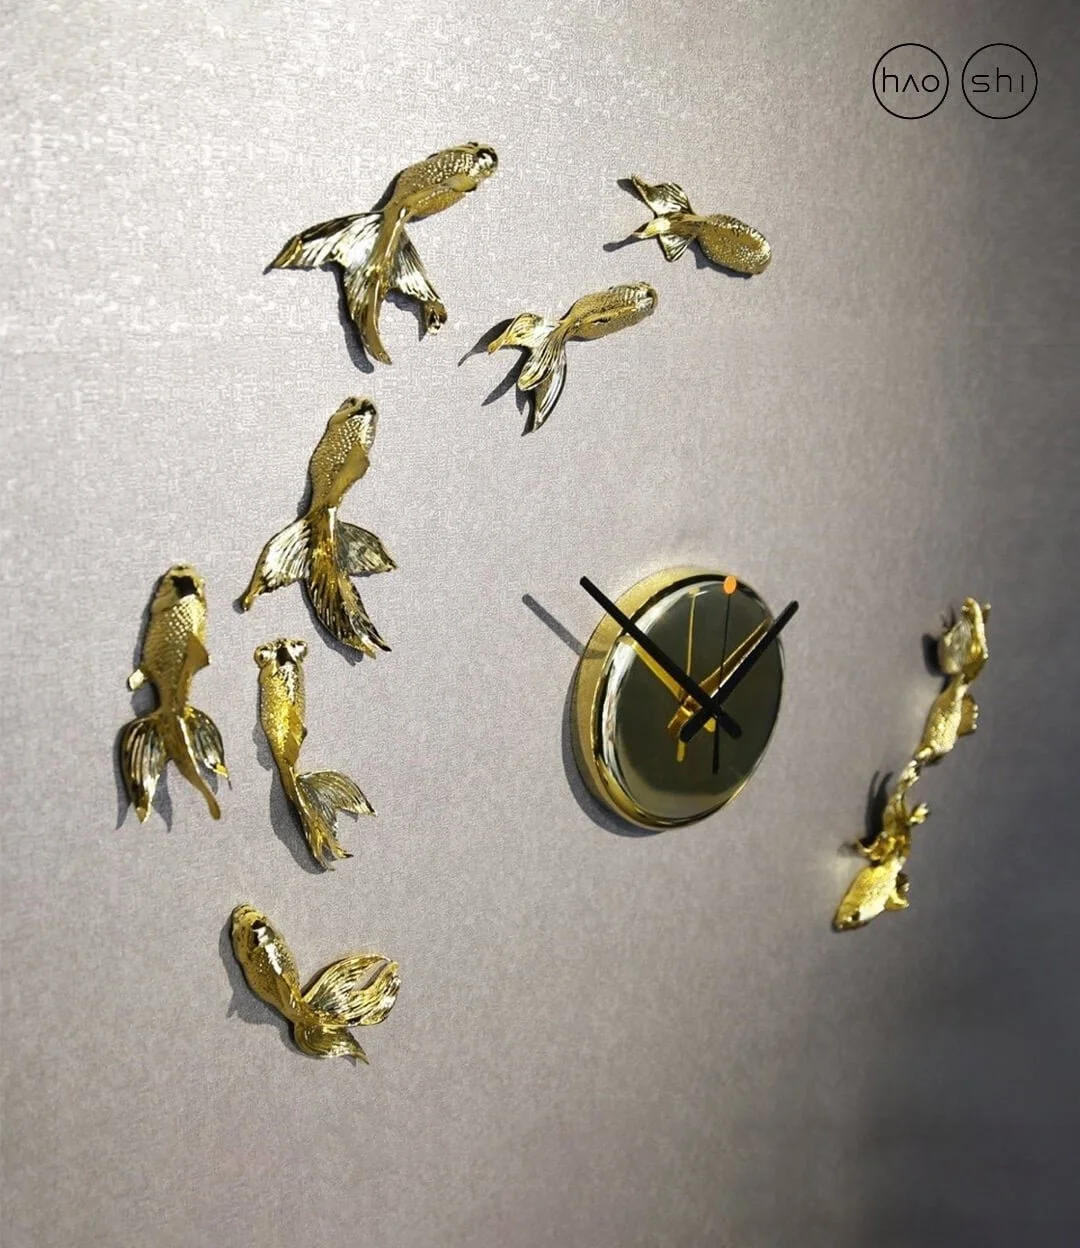 Goldfish X Clock- Black Gold by Haoshi 